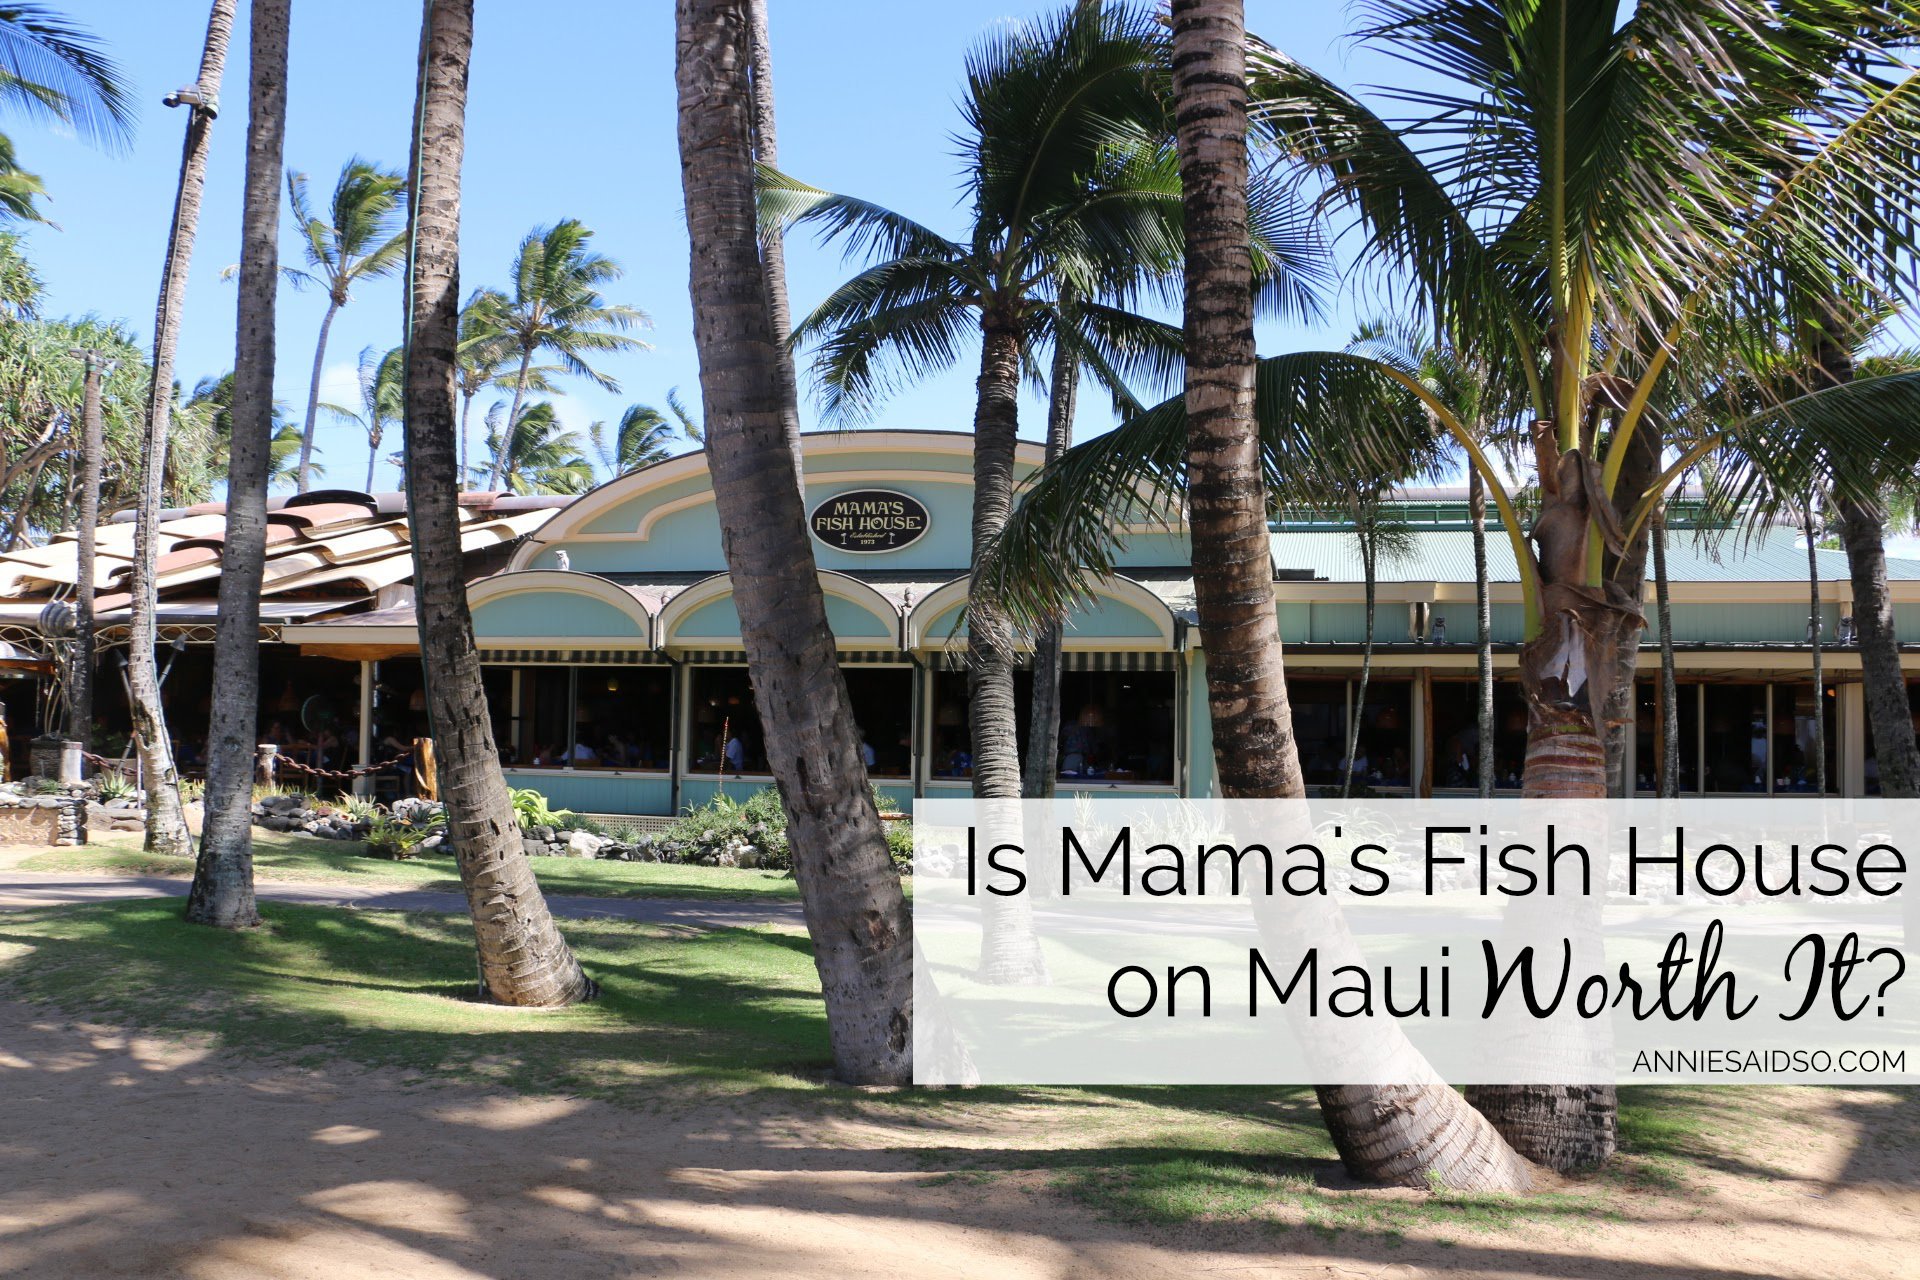 Is Mama’s Fish House on Maui Worth It?